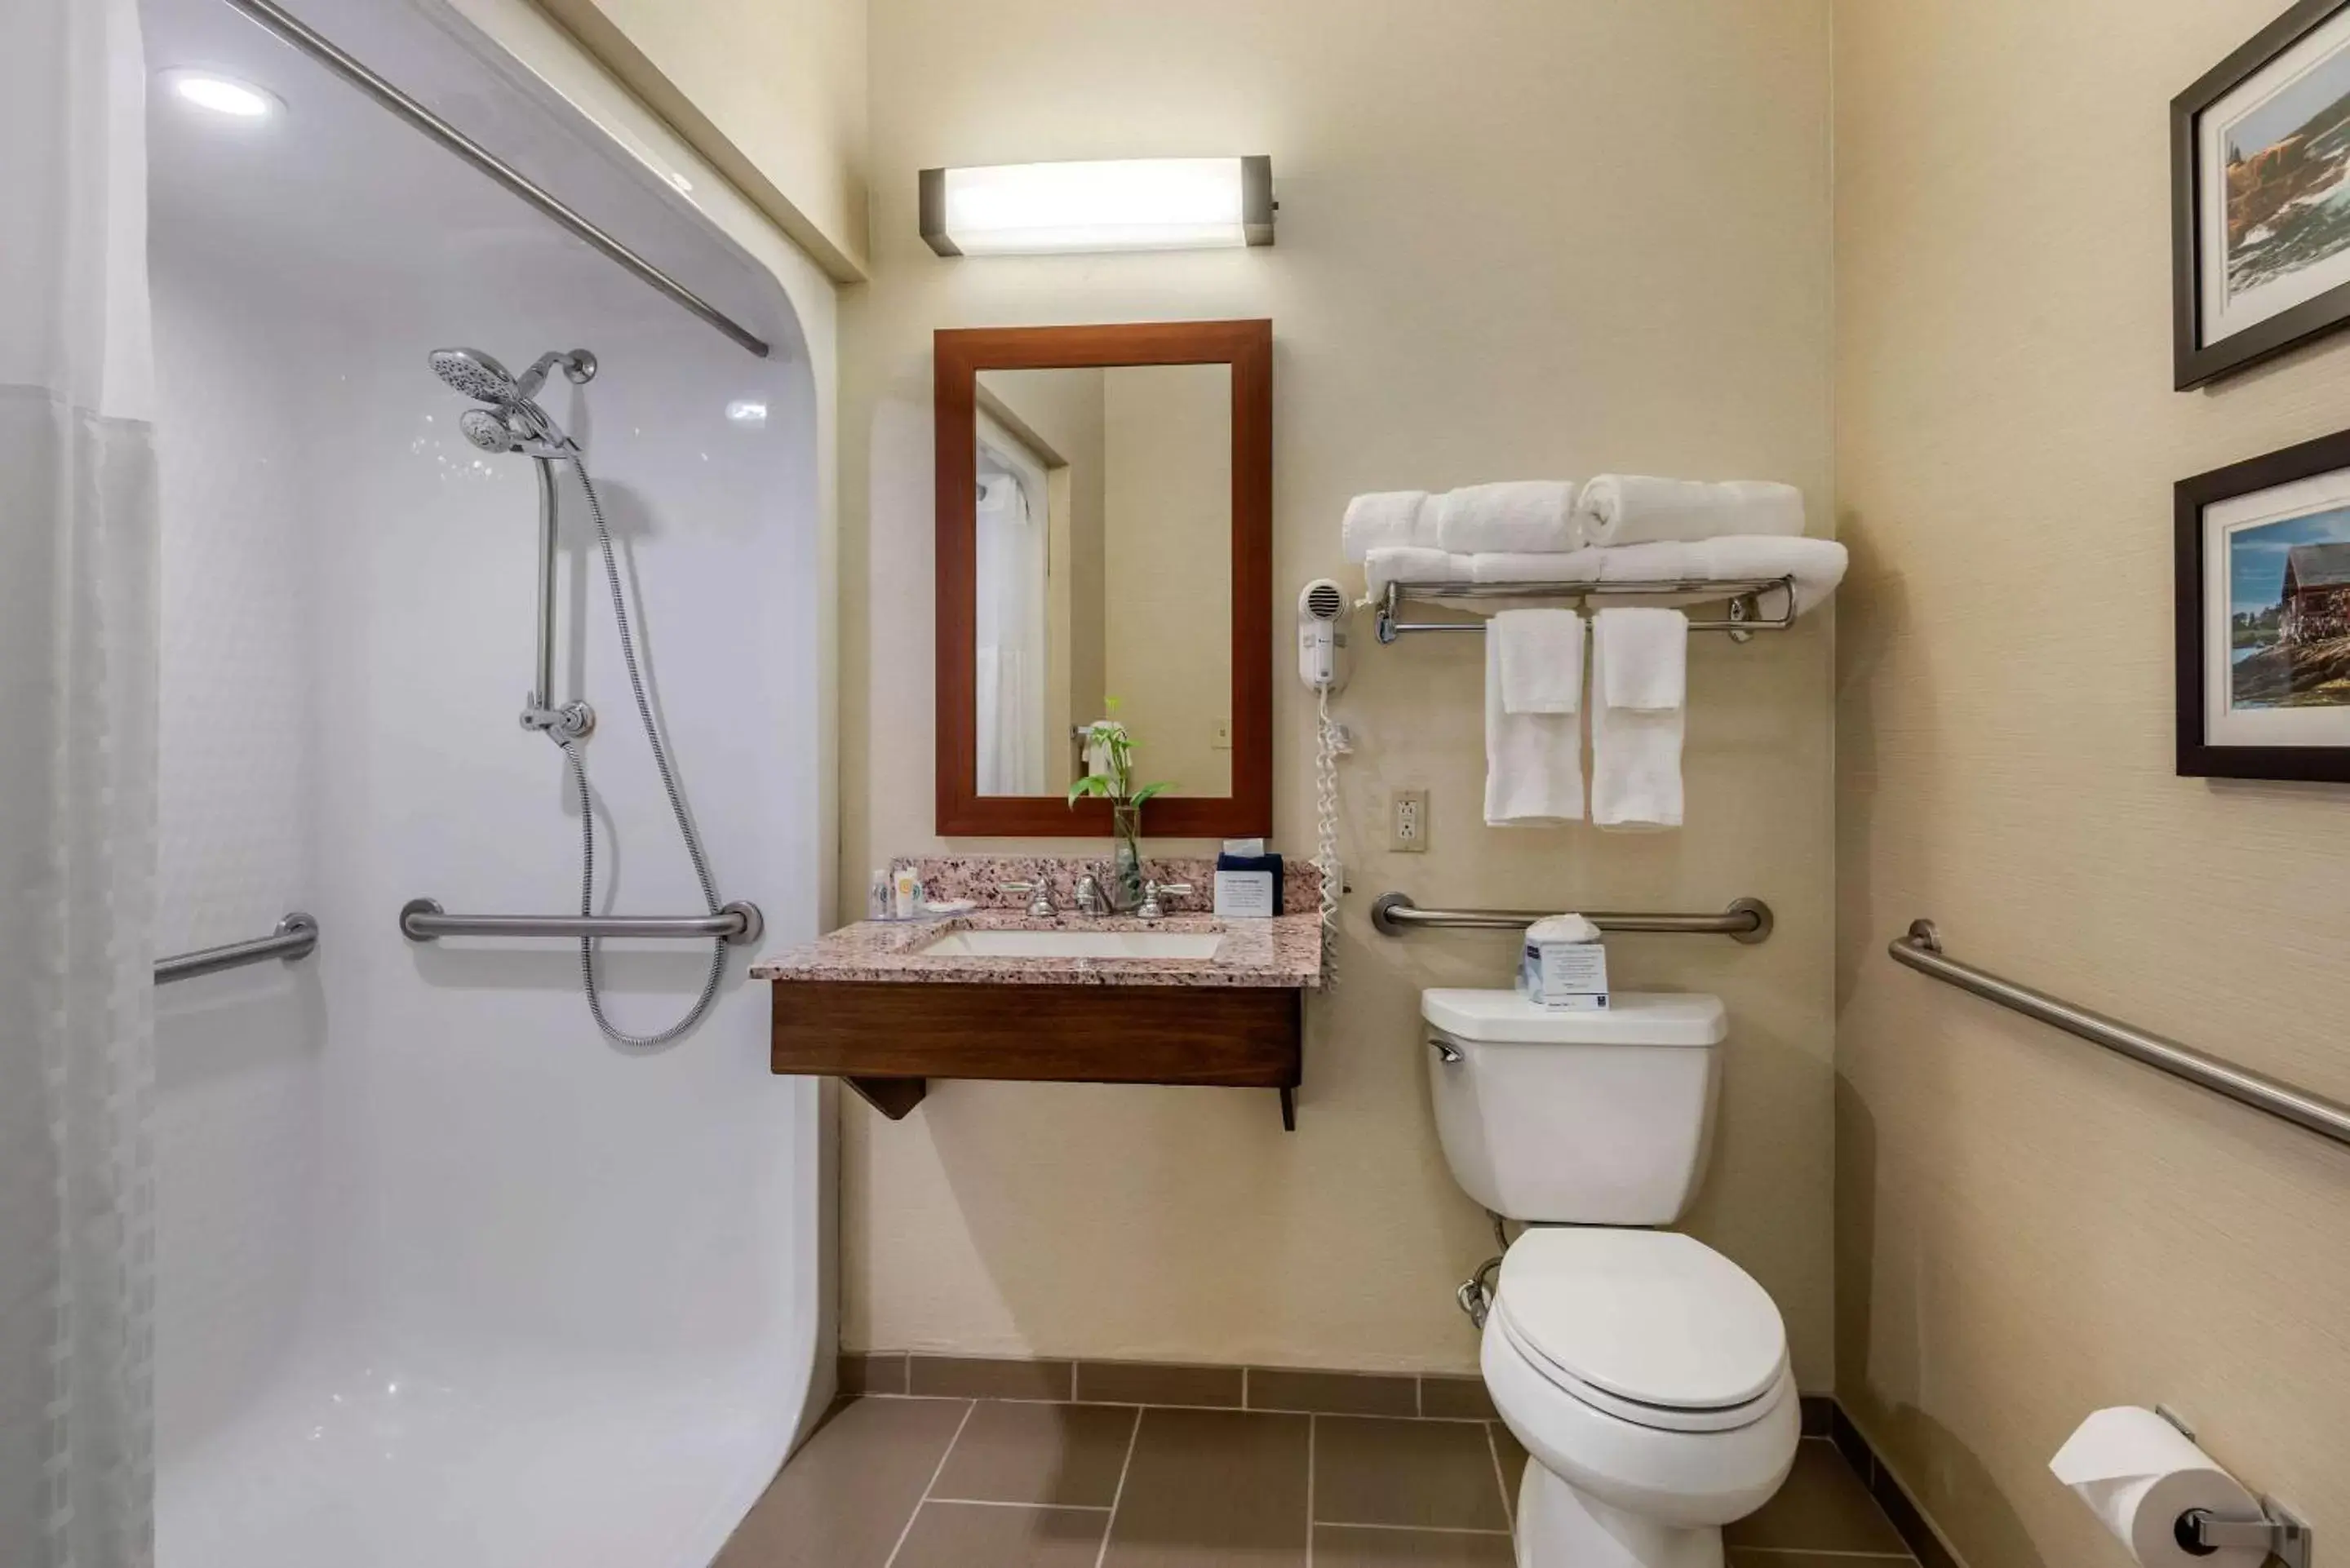 Photo of the whole room, Bathroom in Comfort Inn Ellsworth